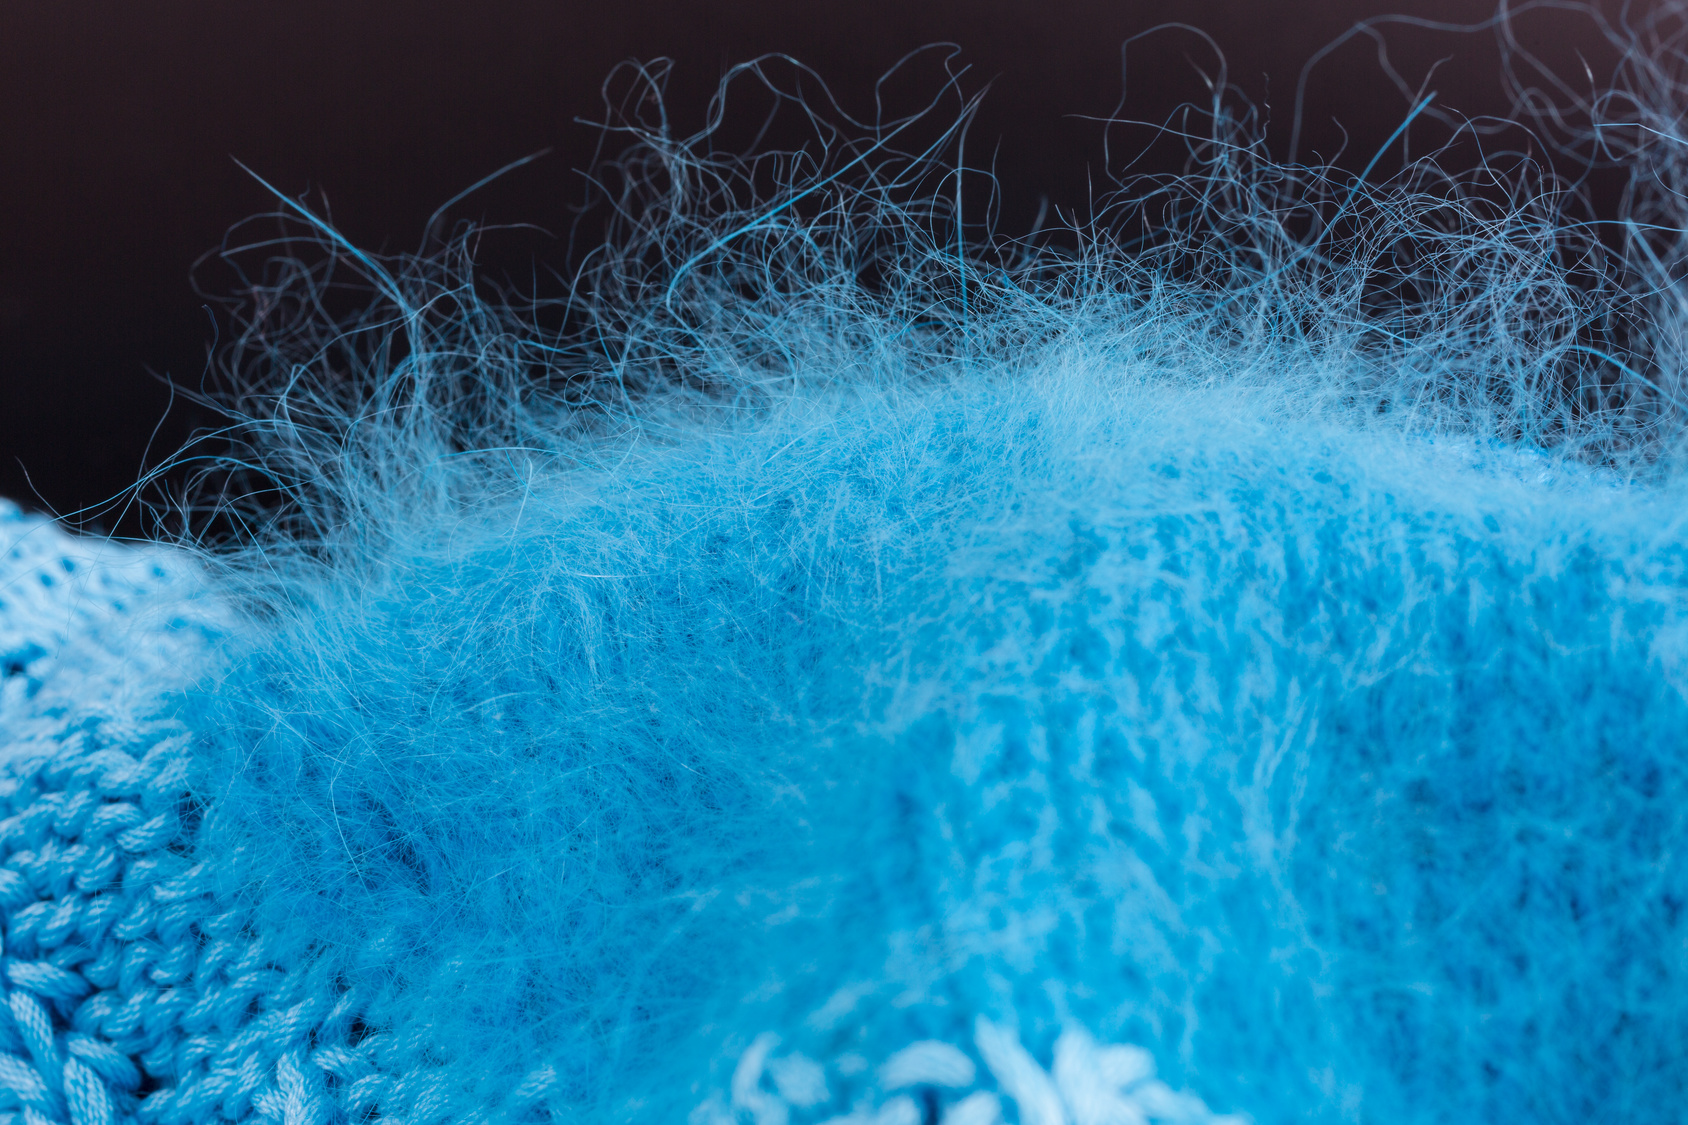 La laine angora a tendance à perdre ses poils. © seramoje - Fotolia.com